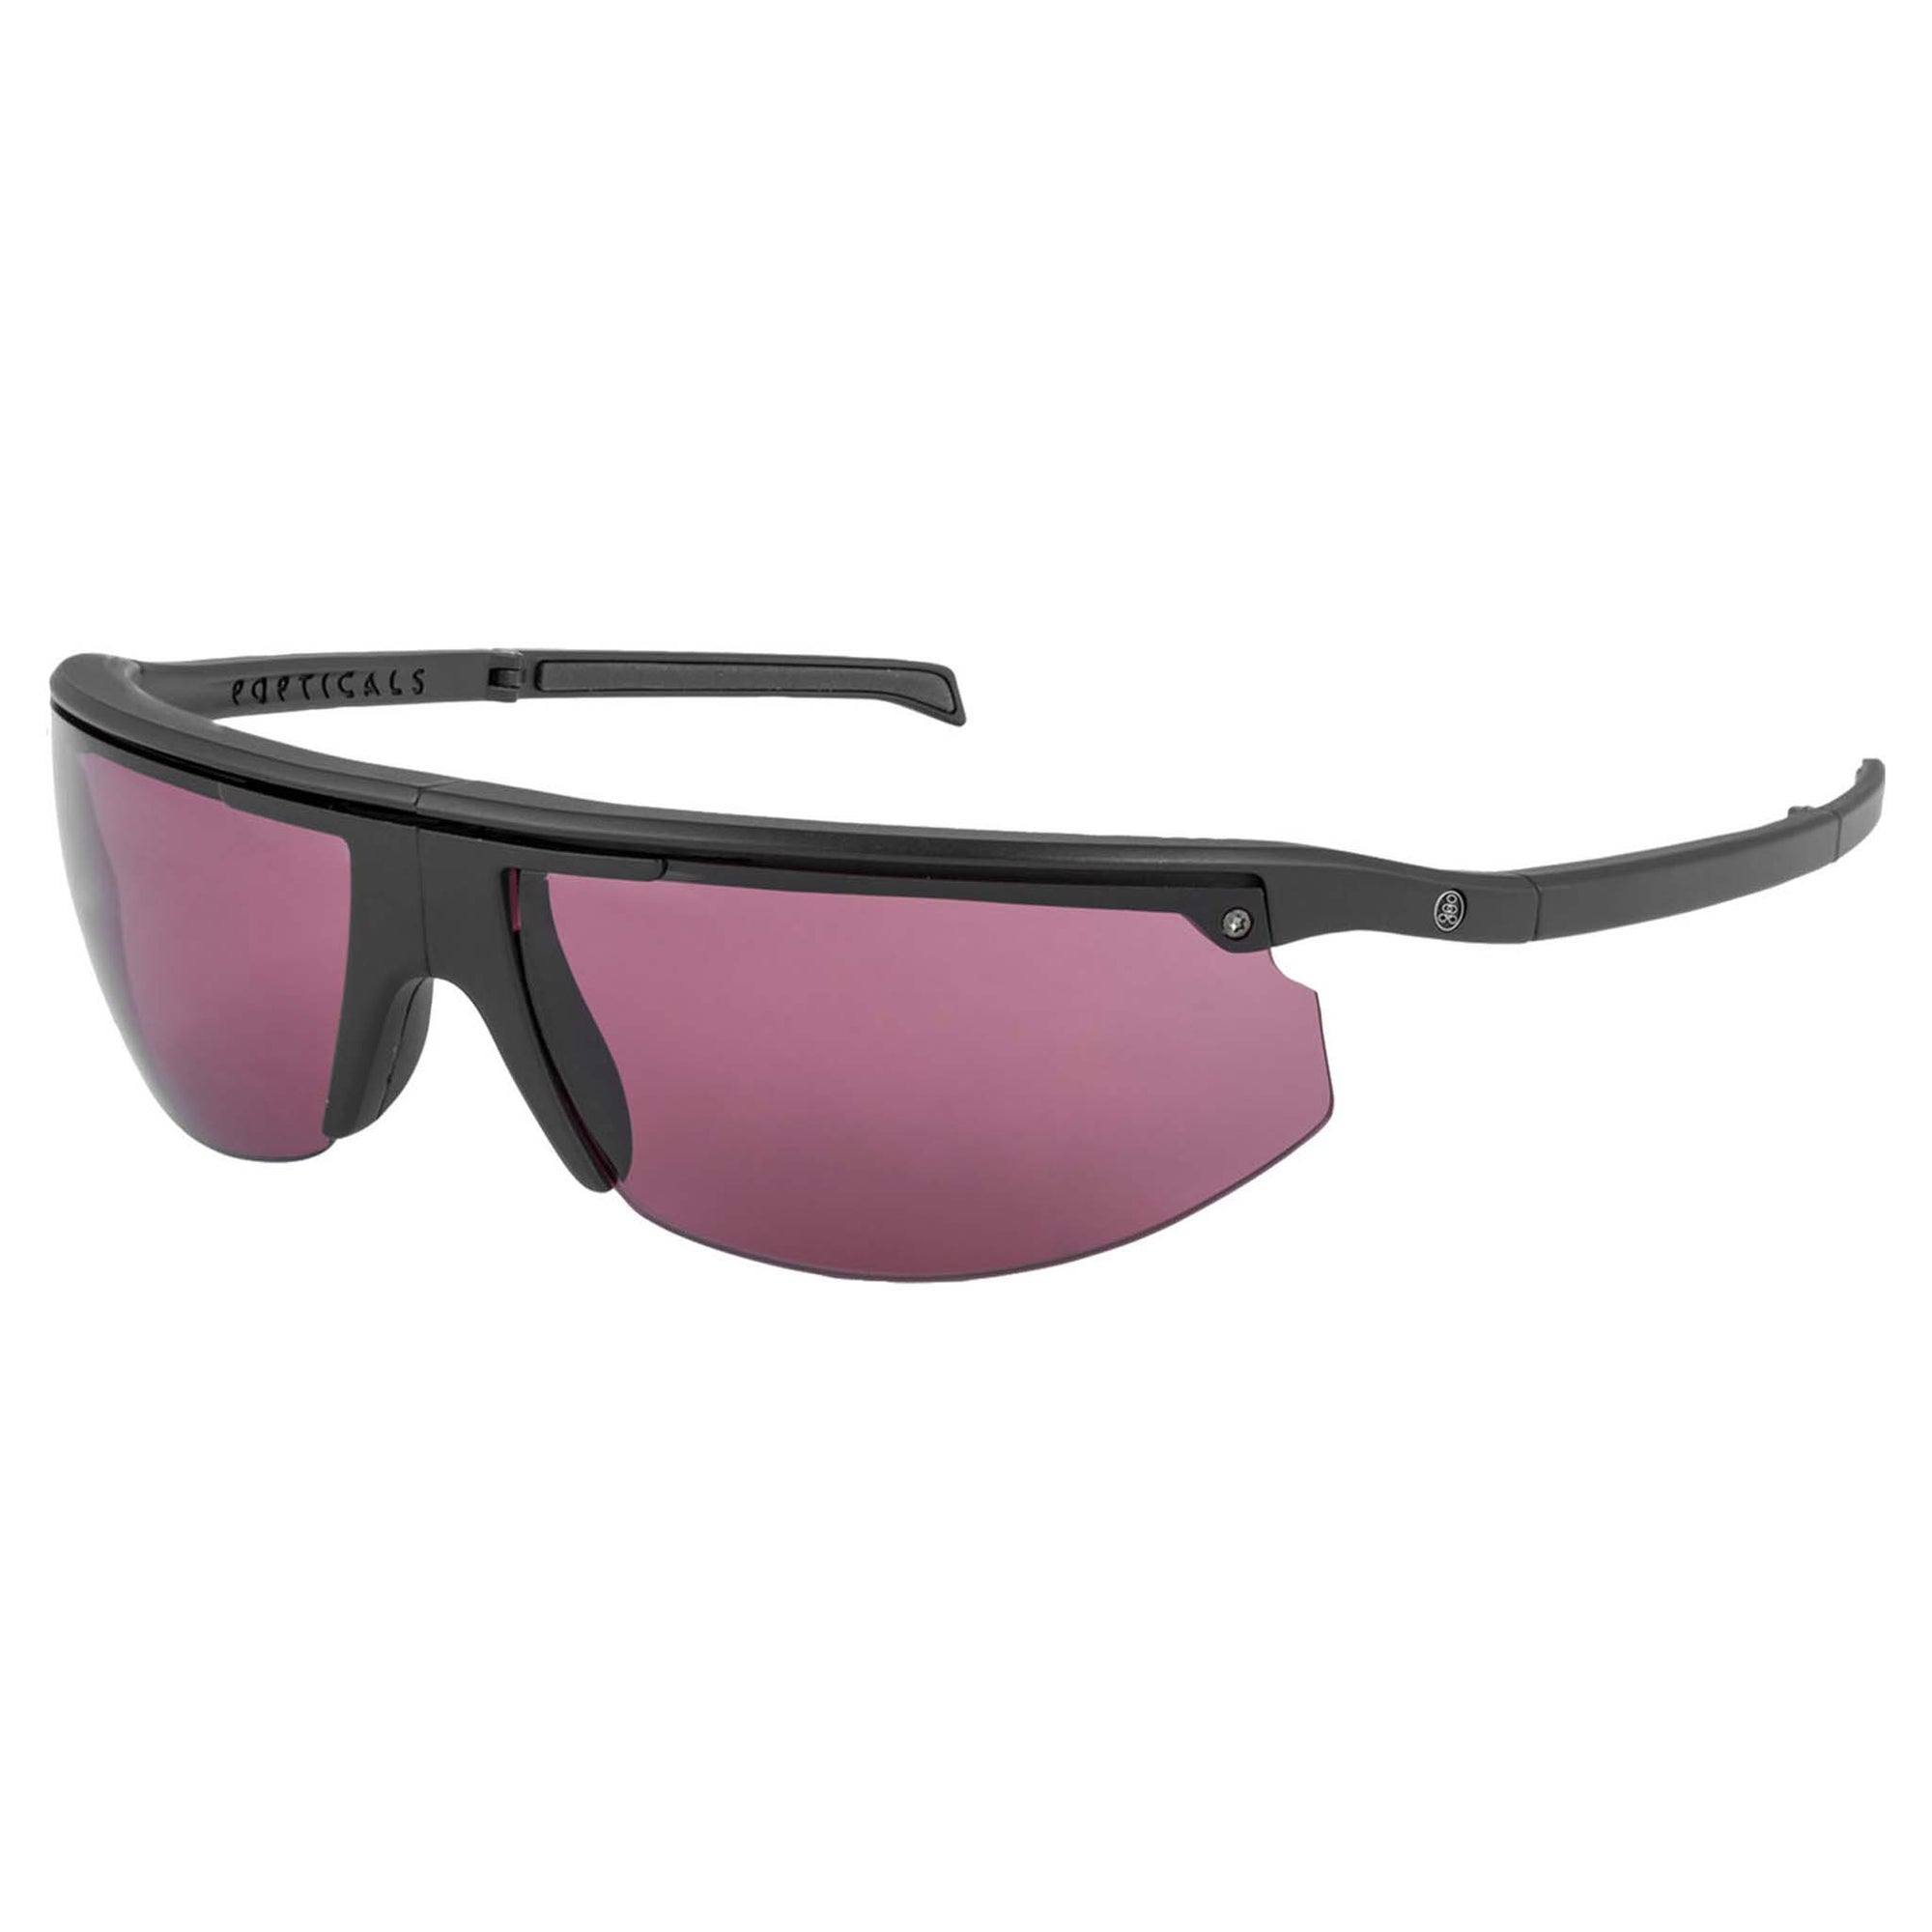 Popticals, Premium Compact Sunglasses, PopStar, 200040-BMPS, Standard Golf Sunglasses, Matte Black Frame, Purple Golf Lenses, Glam View